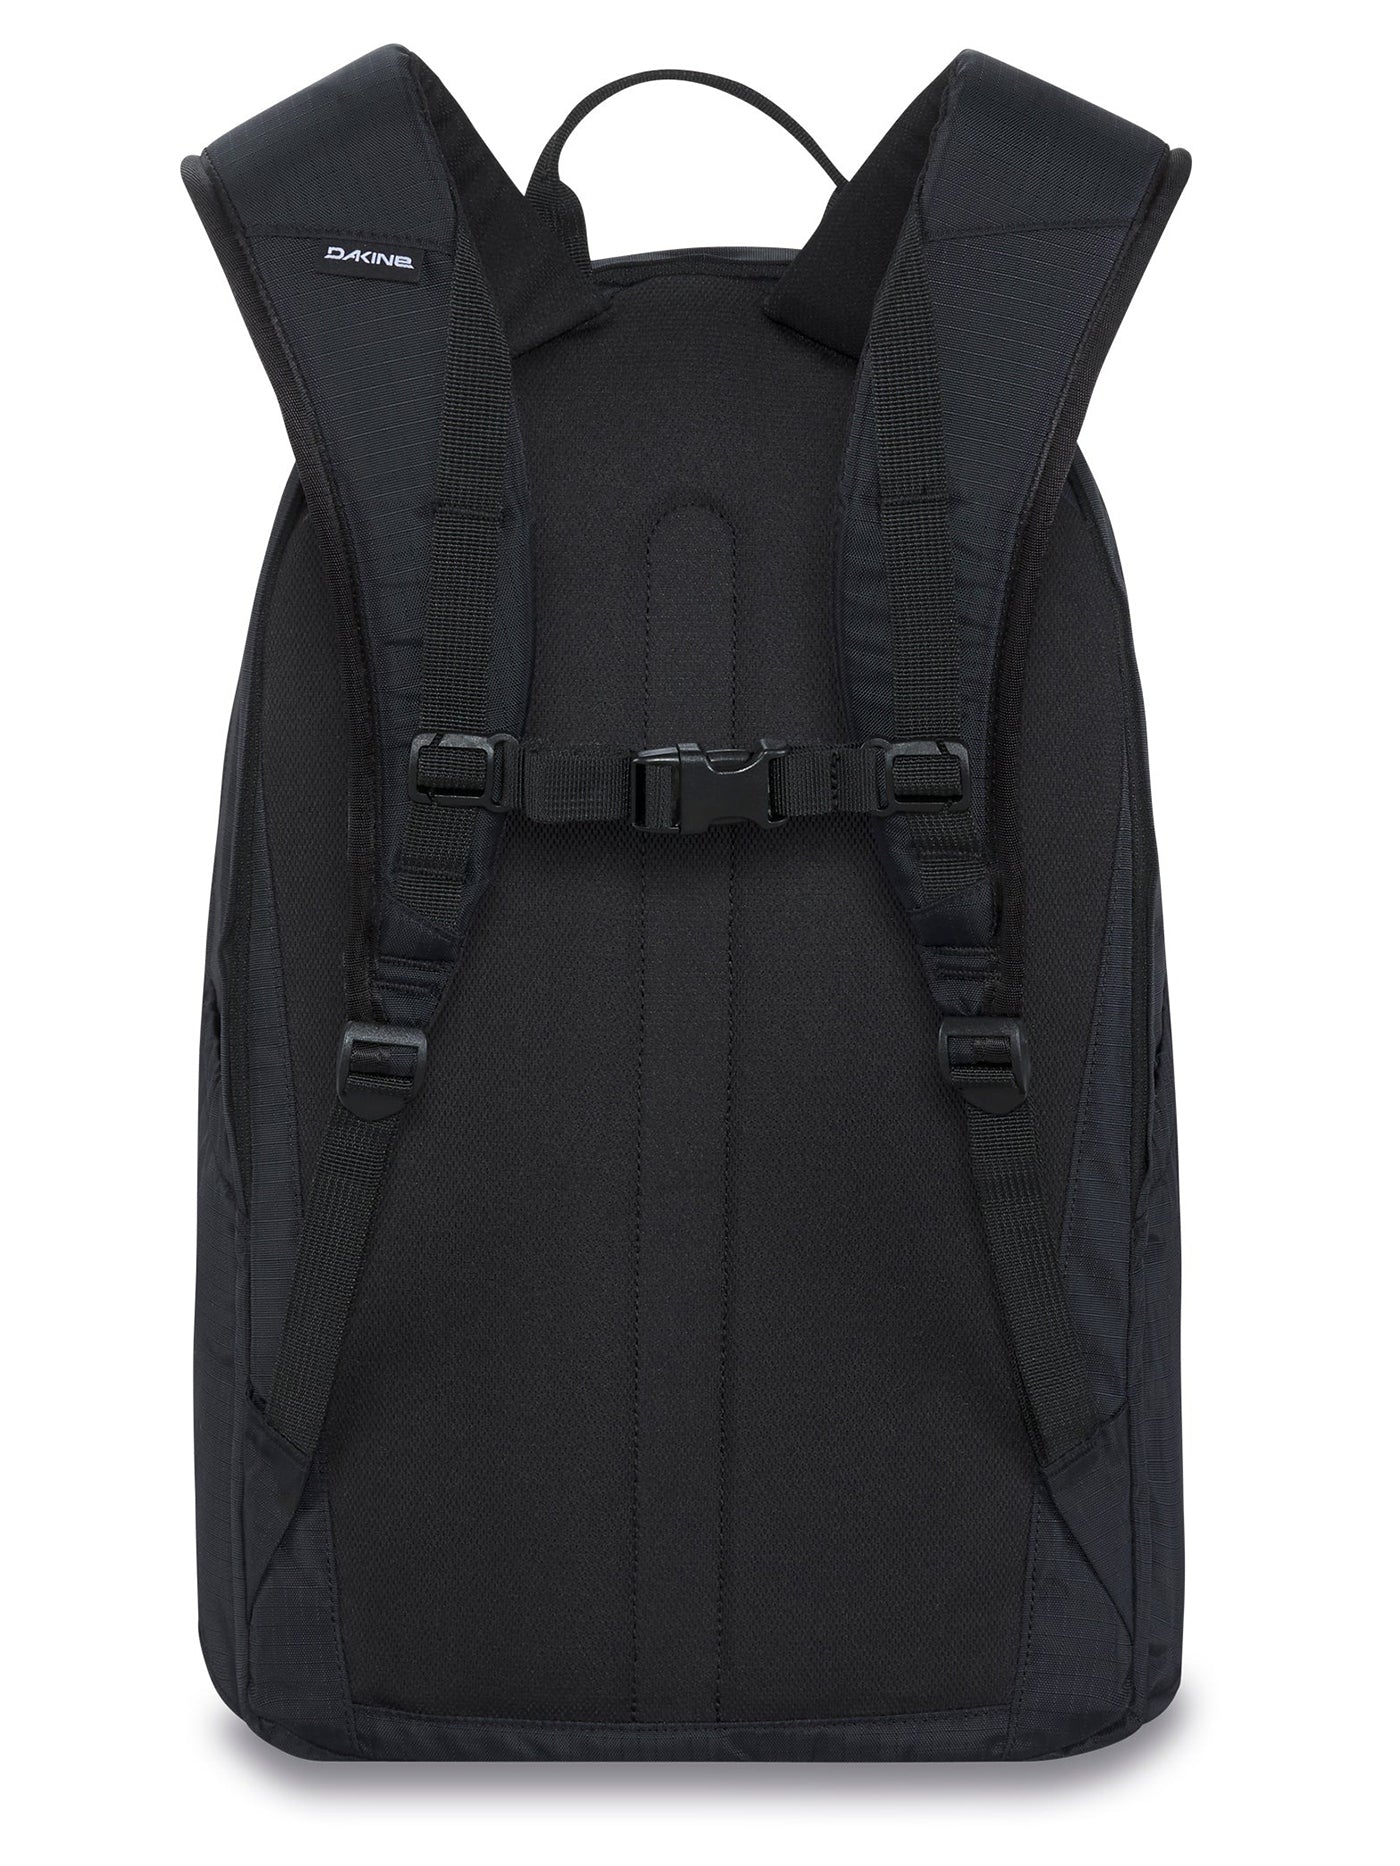 Dakine Method DLX Backpack